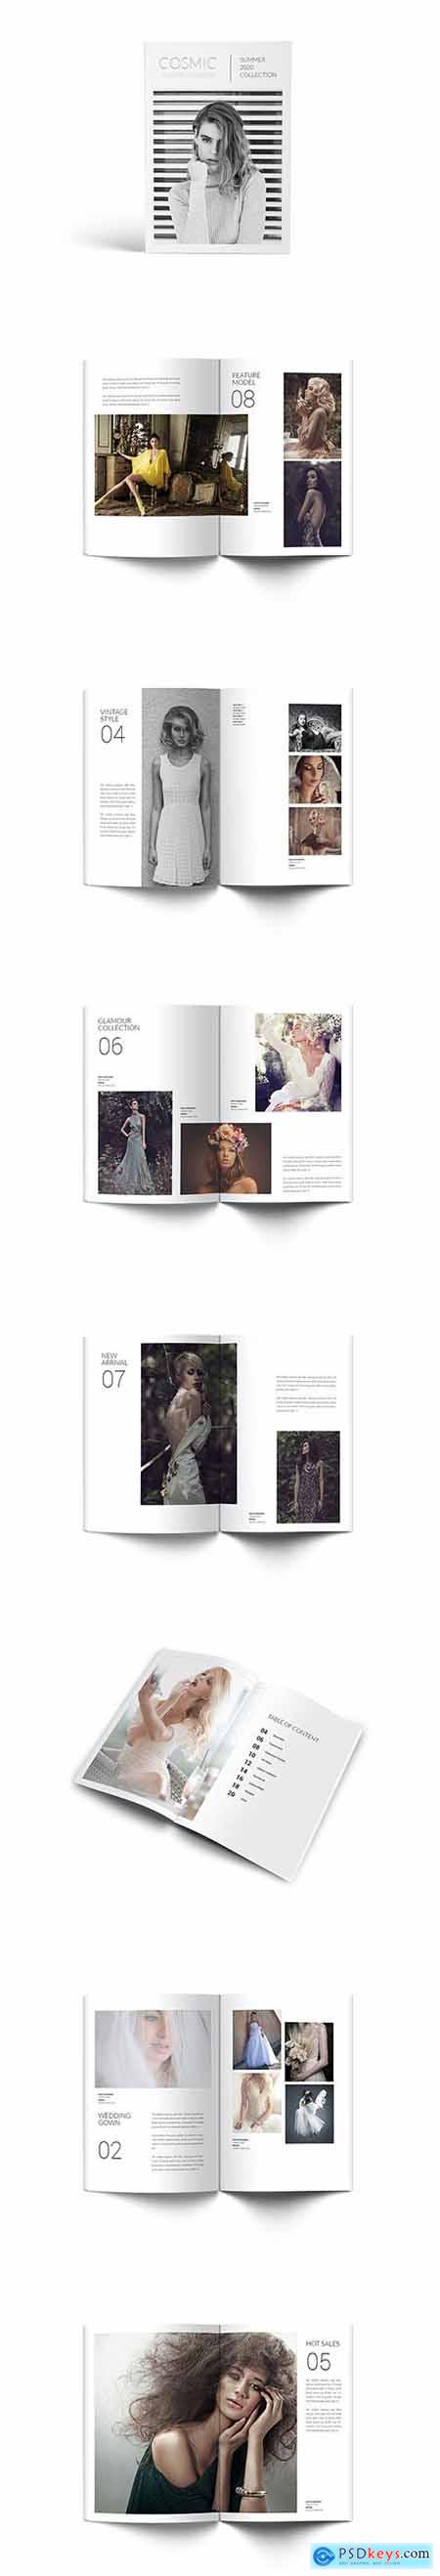 Cosmic - Fashion A4 Lookbook